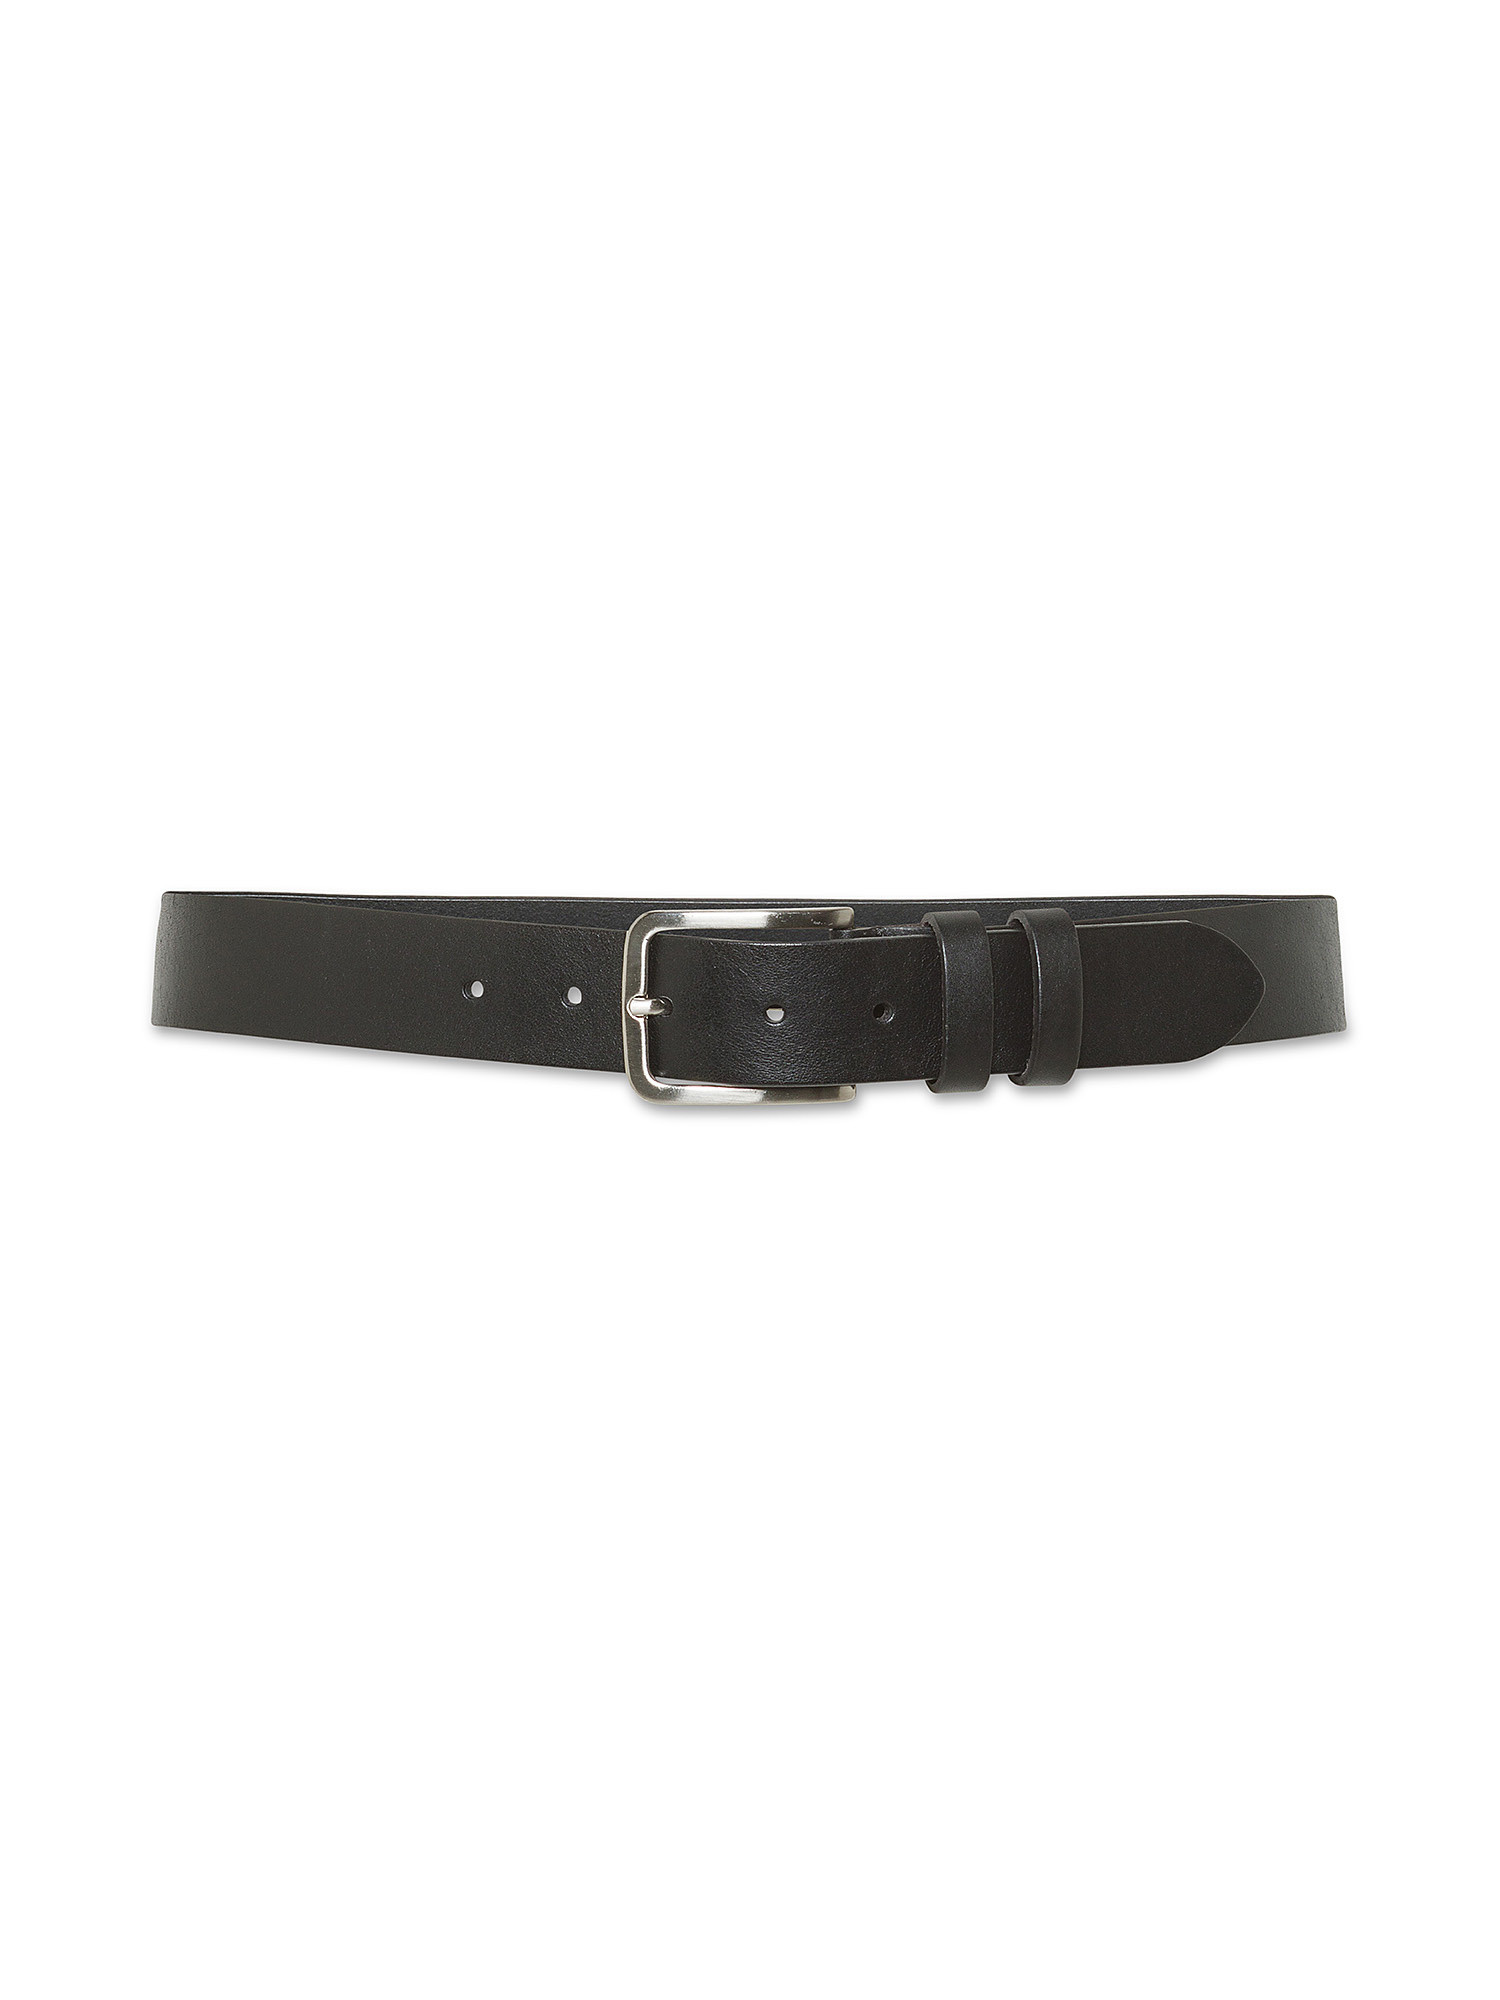 Luca D'Altieri - Leather belt, Black, large image number 1